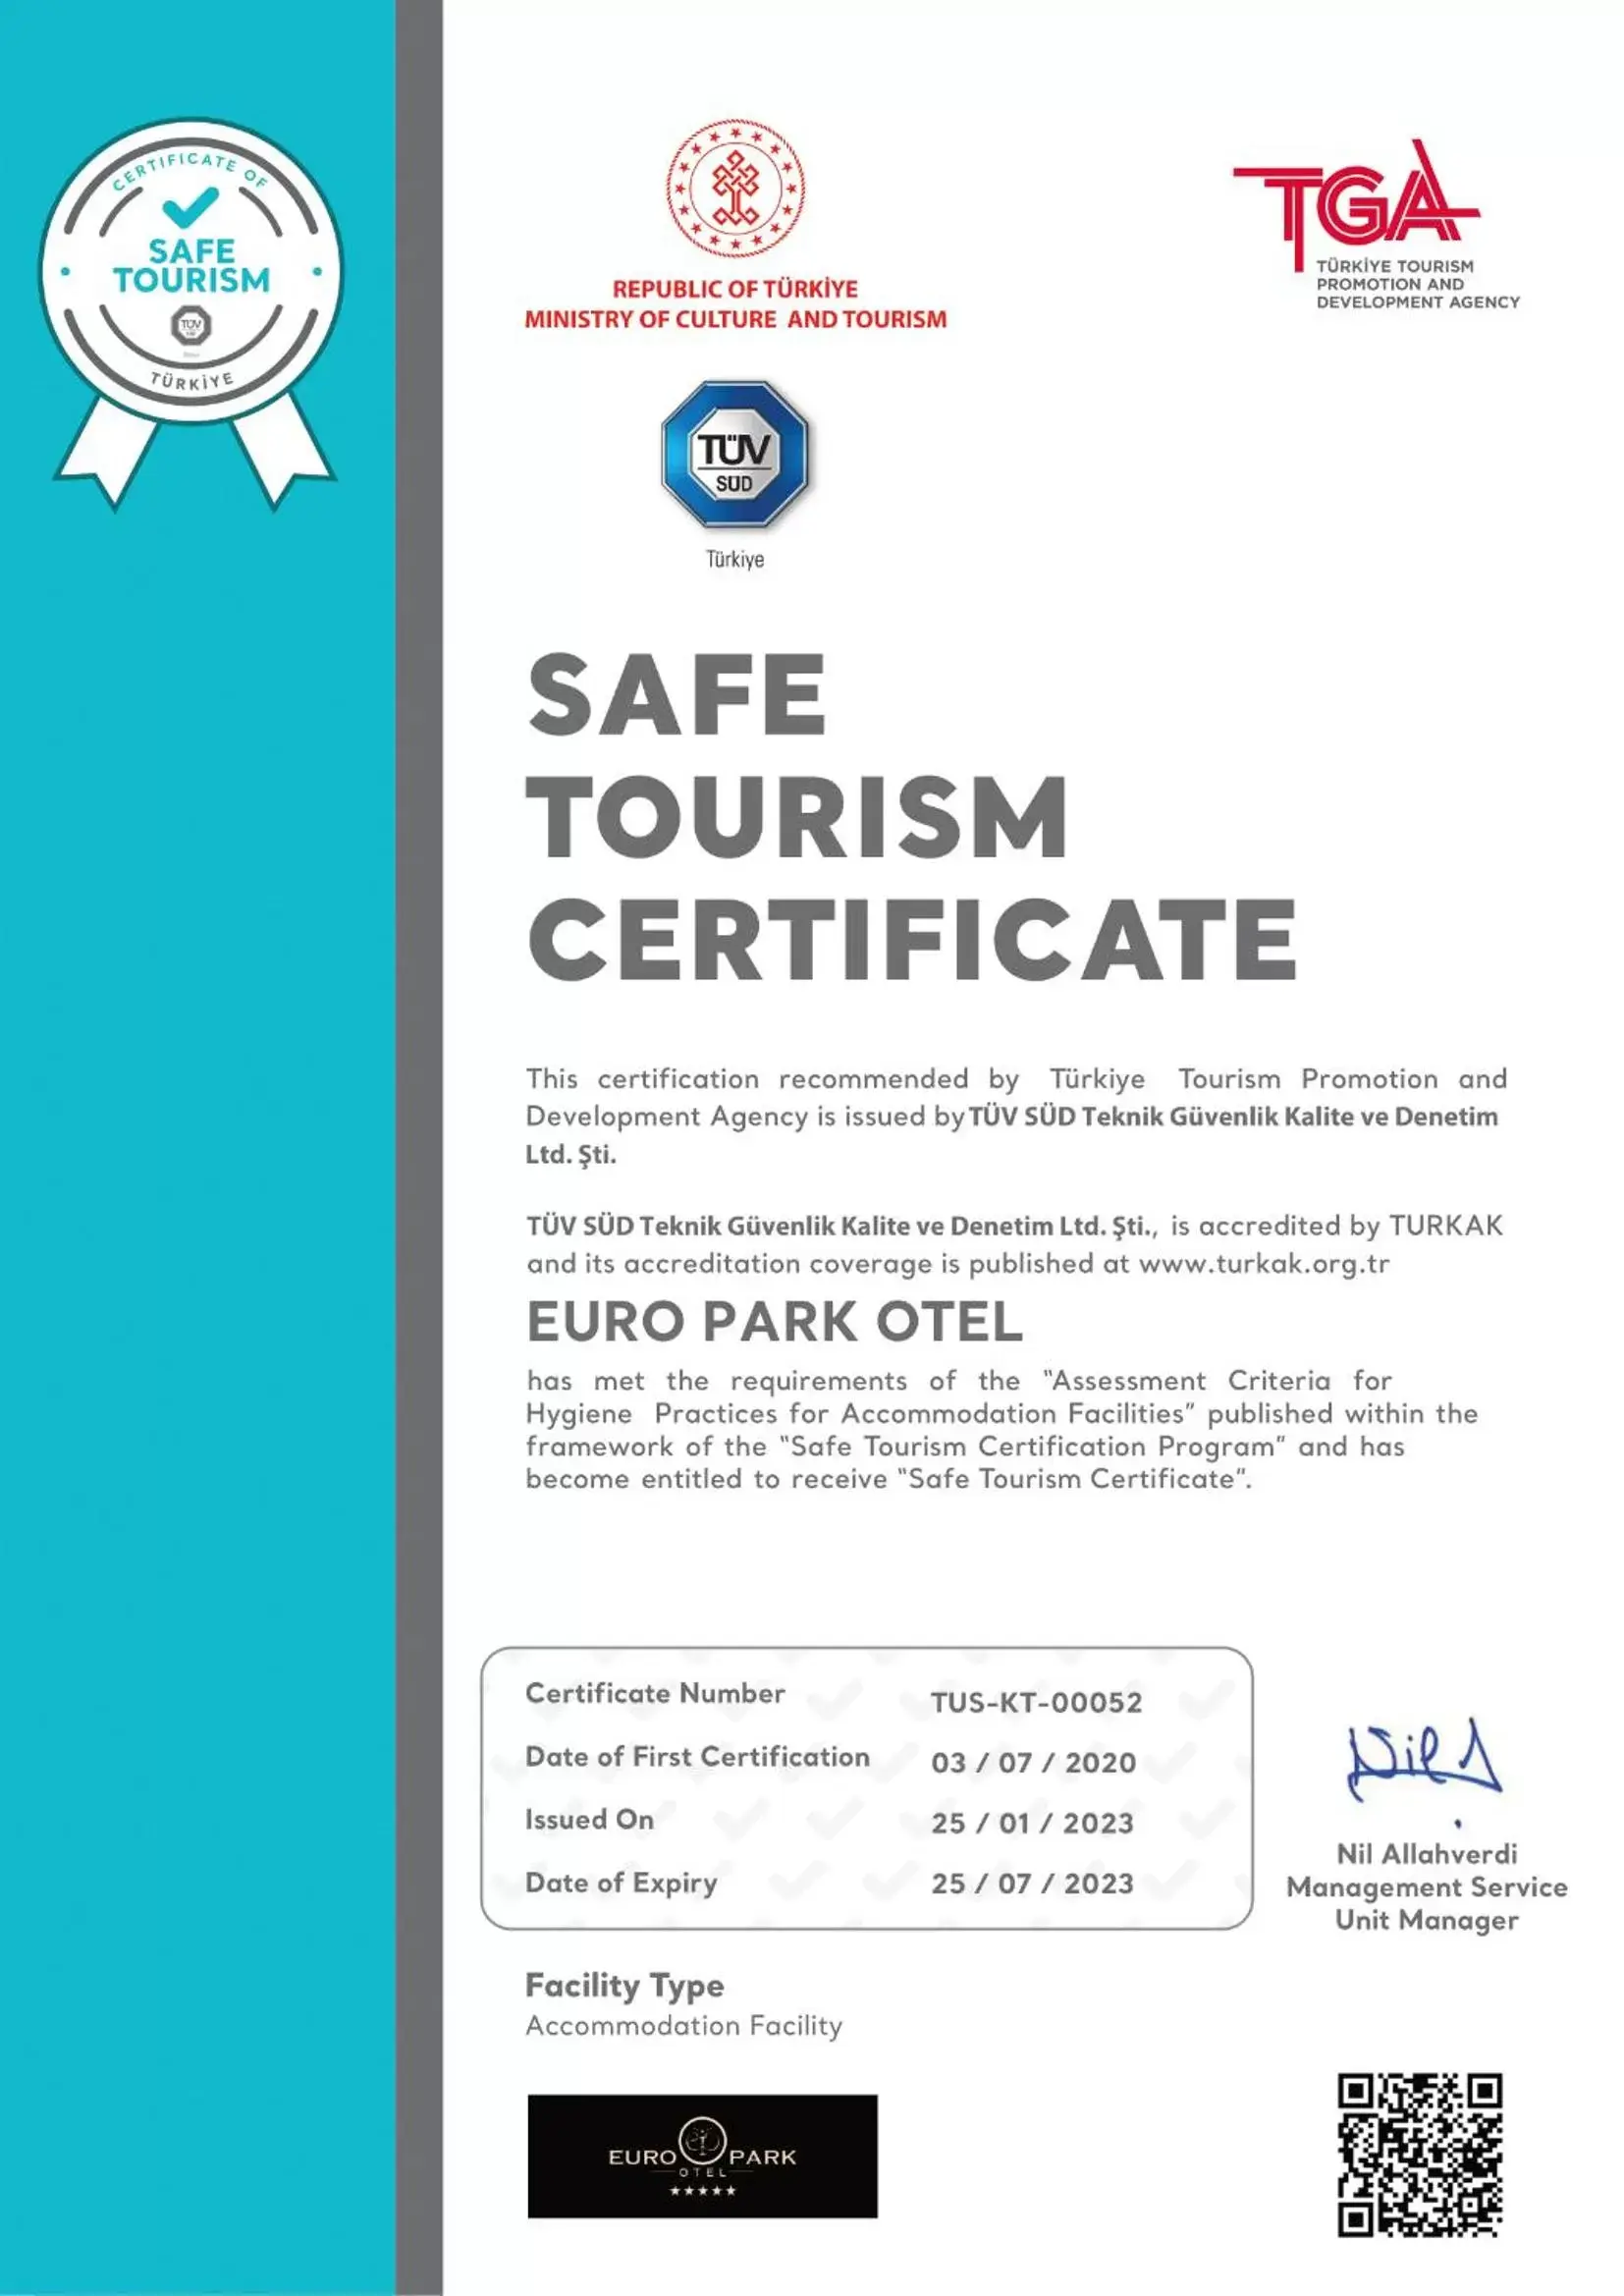 Certificate/Award in Euro Park Otel